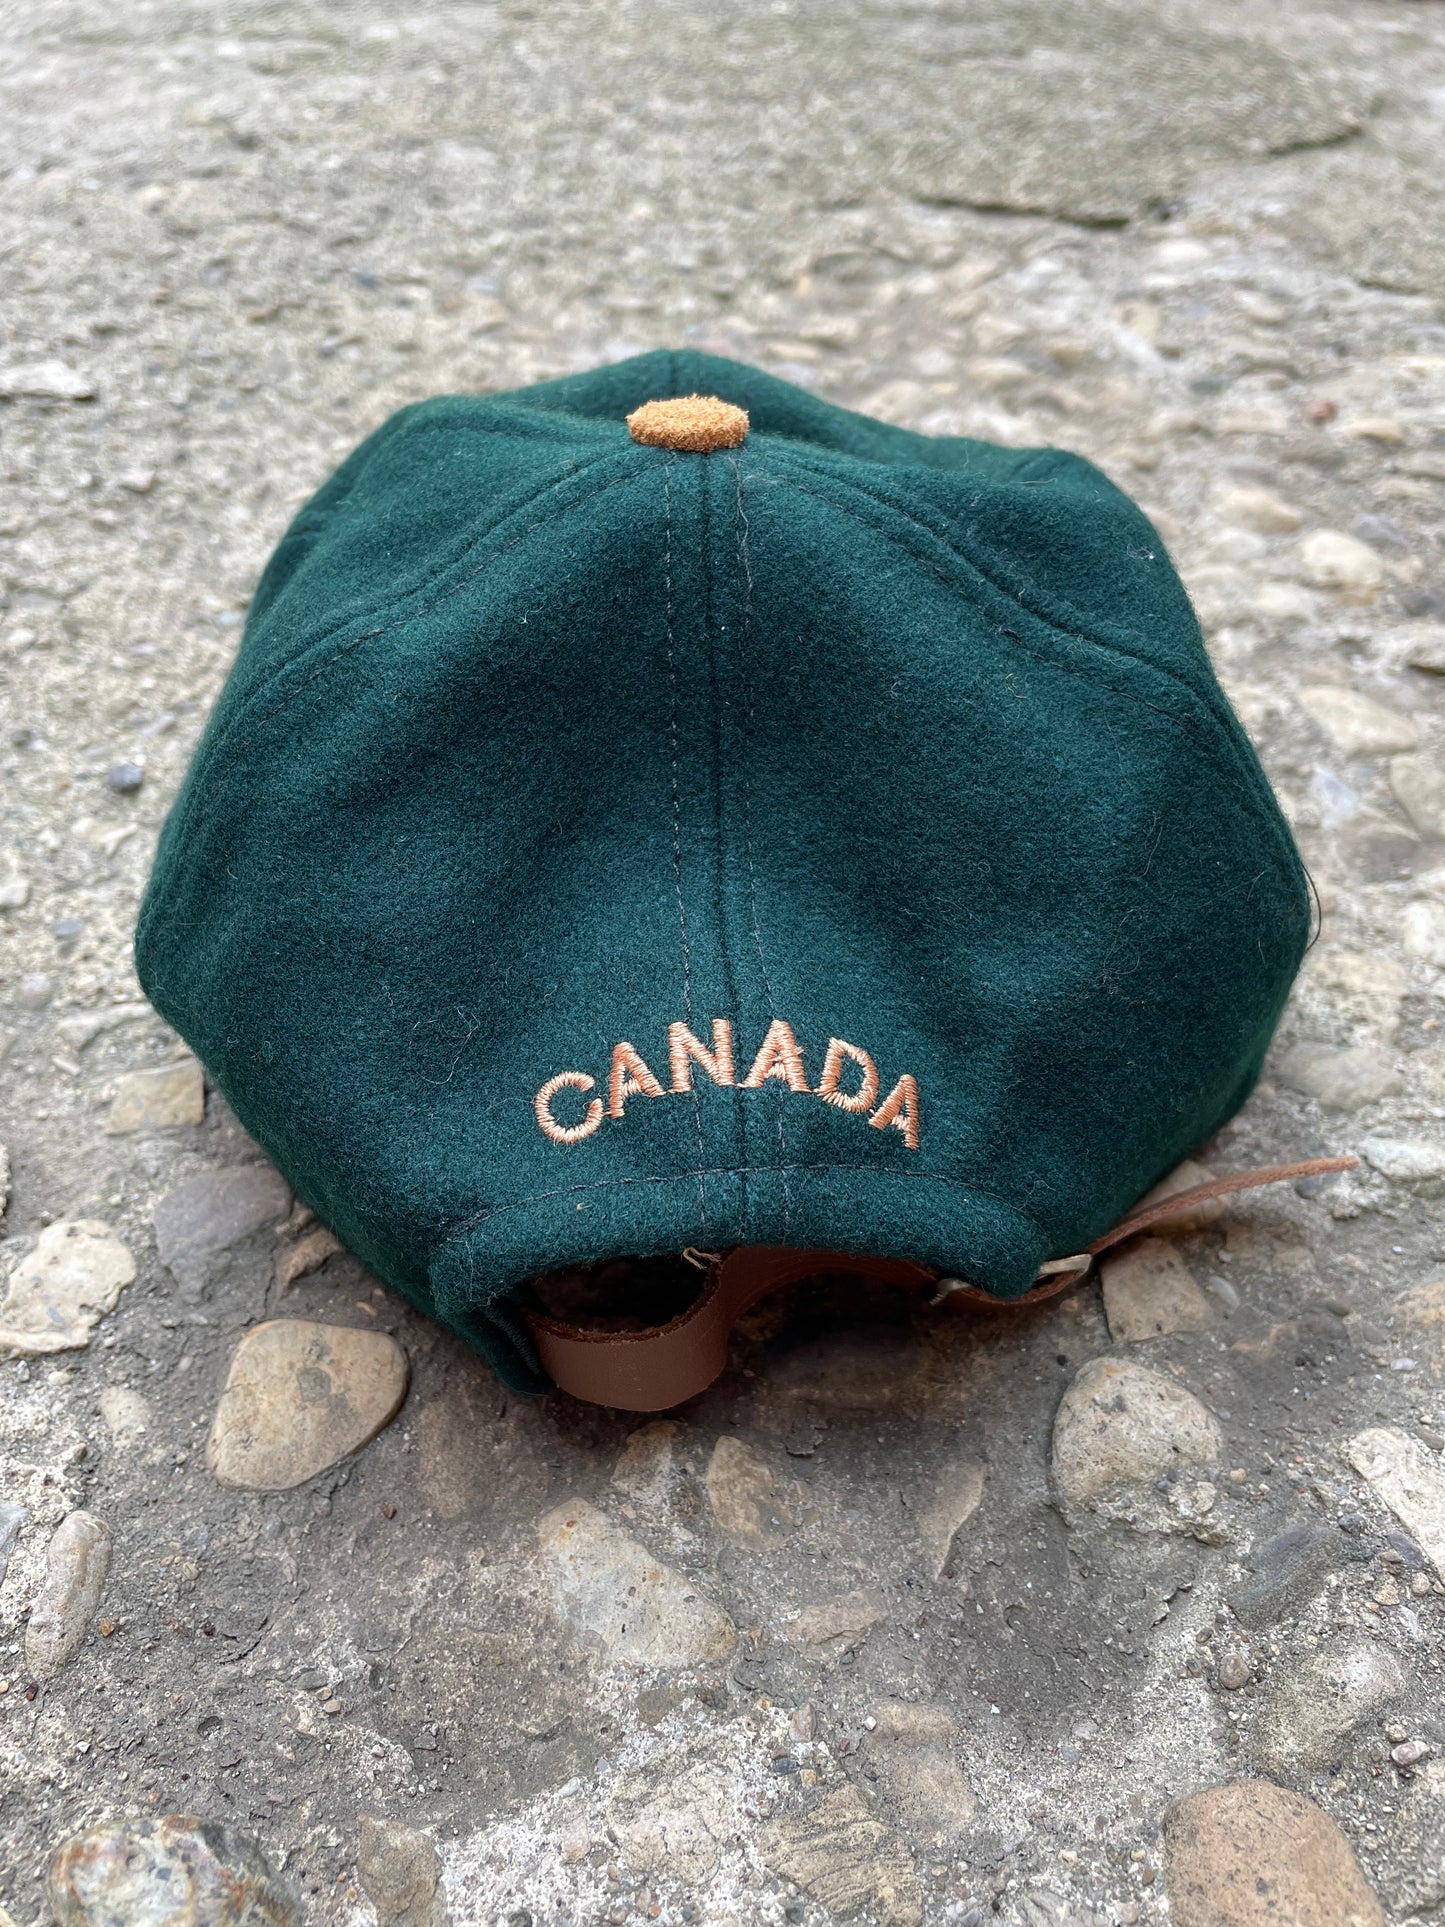 1994 Lillehammer Olympics Team Canada Hat